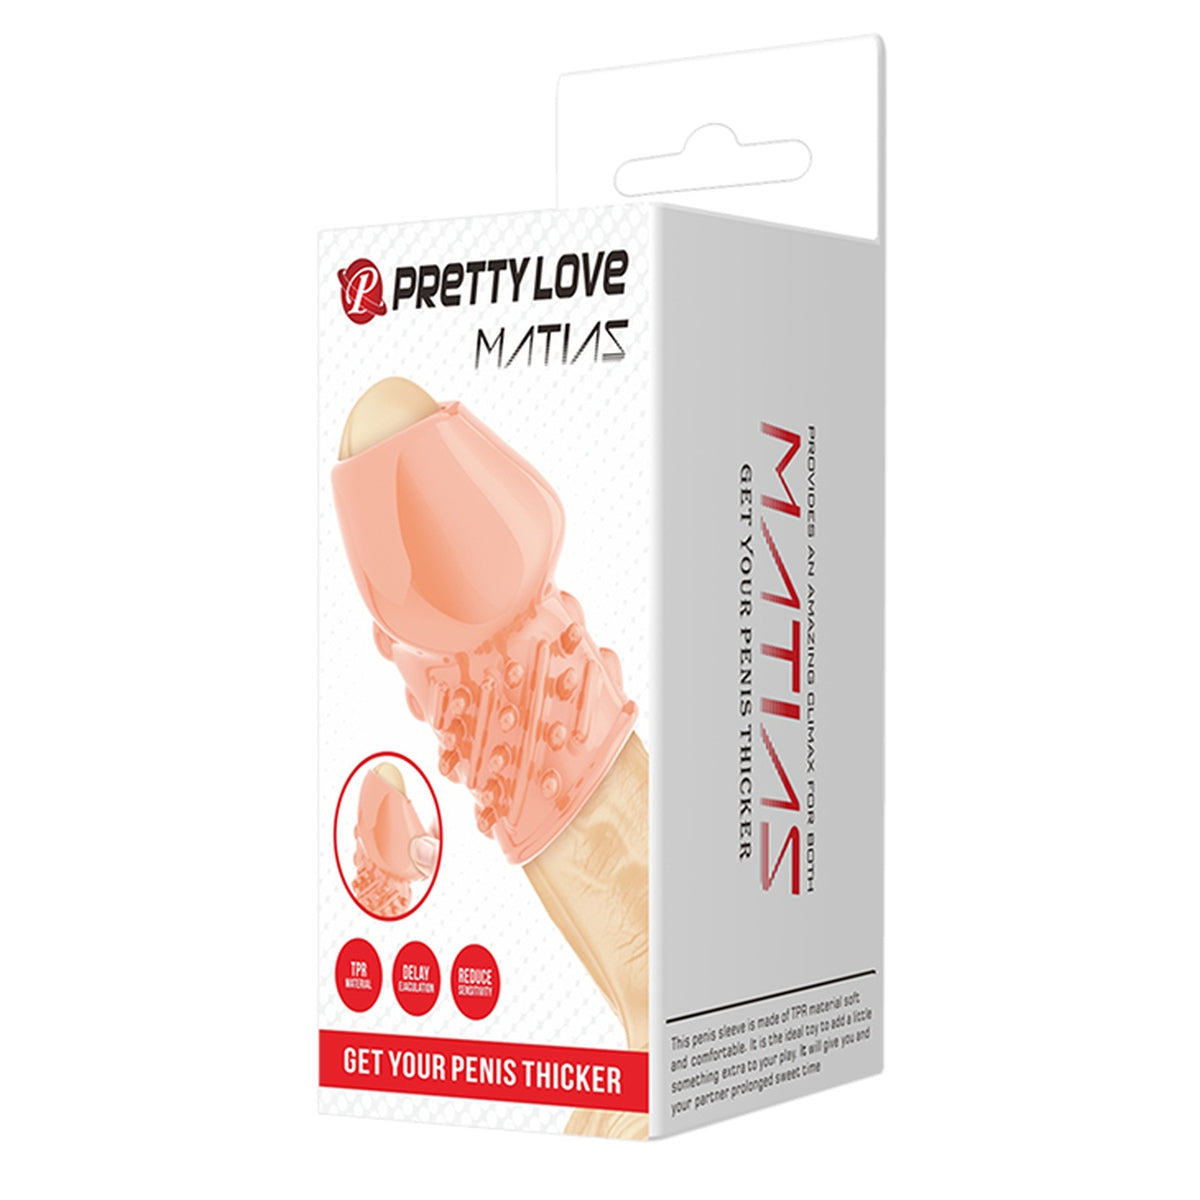 Pretty Love - Matias - Penis Sleeve